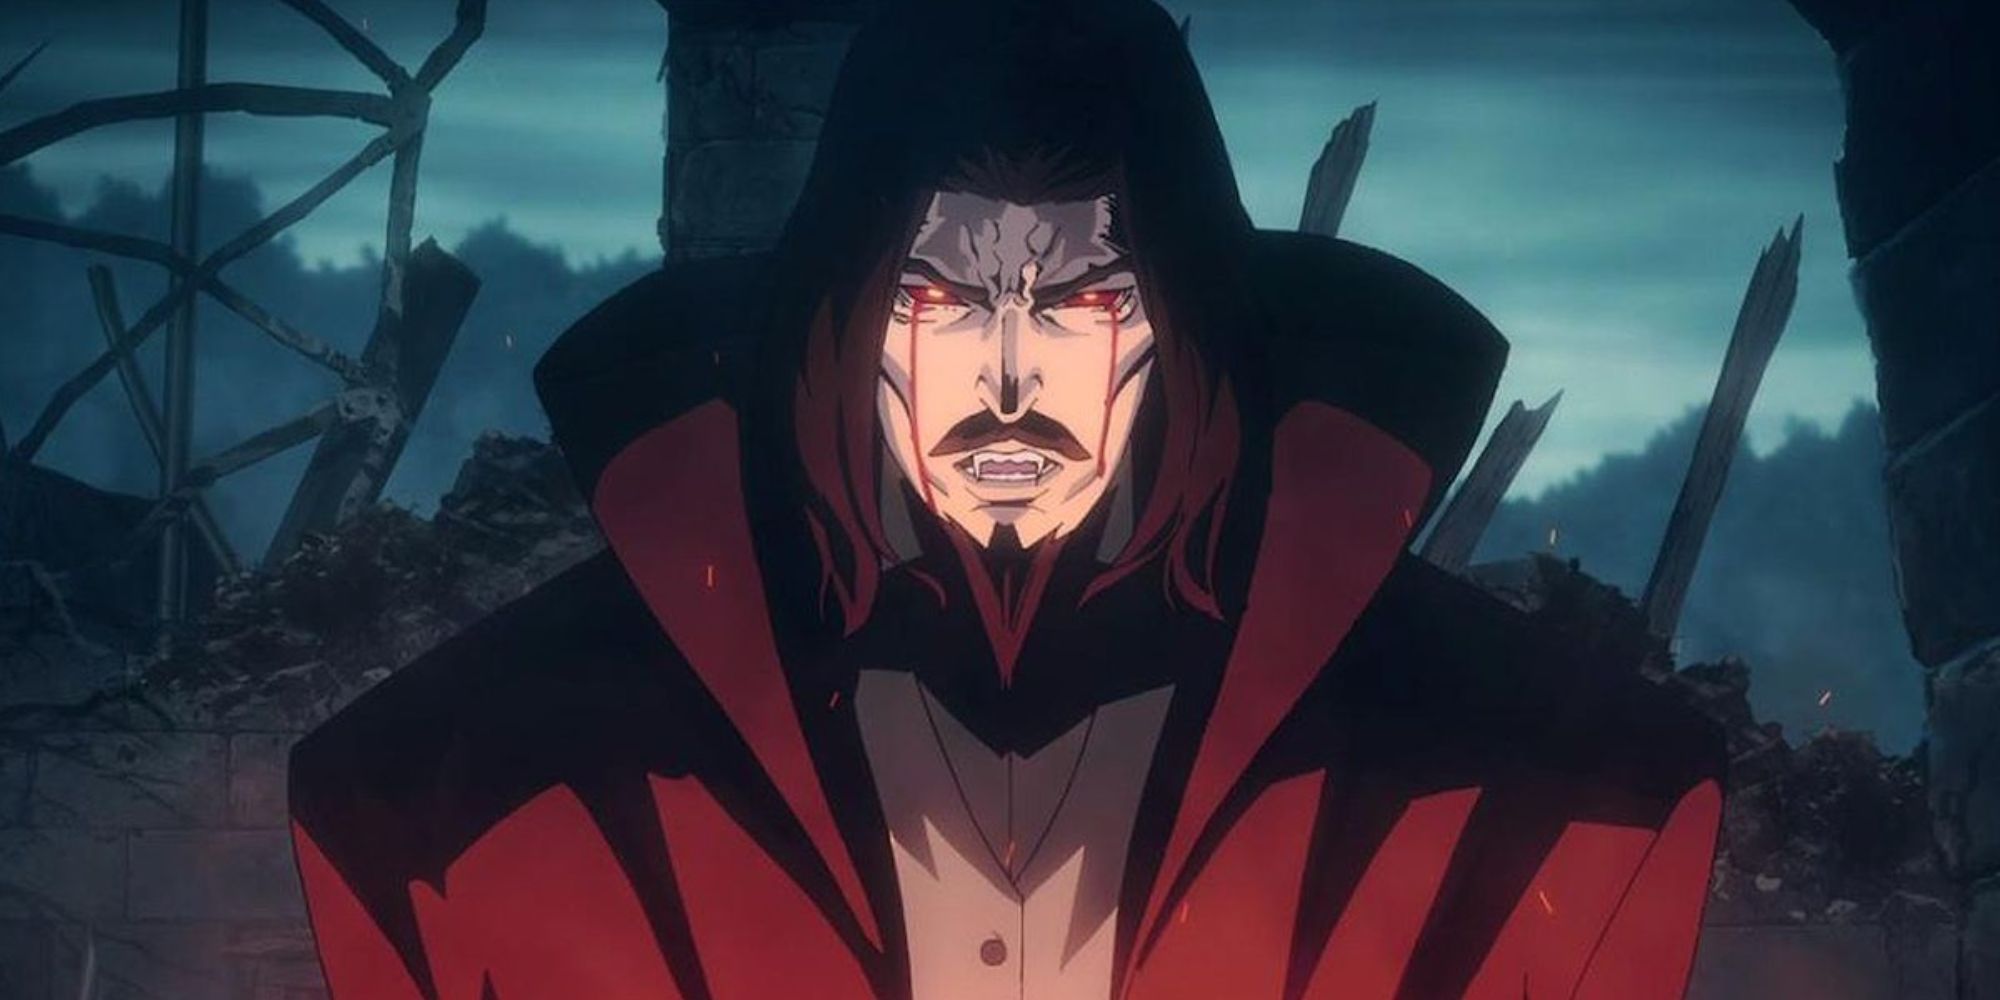 Still of Dracula wearing a red cloak on a battlefield in Castlevania